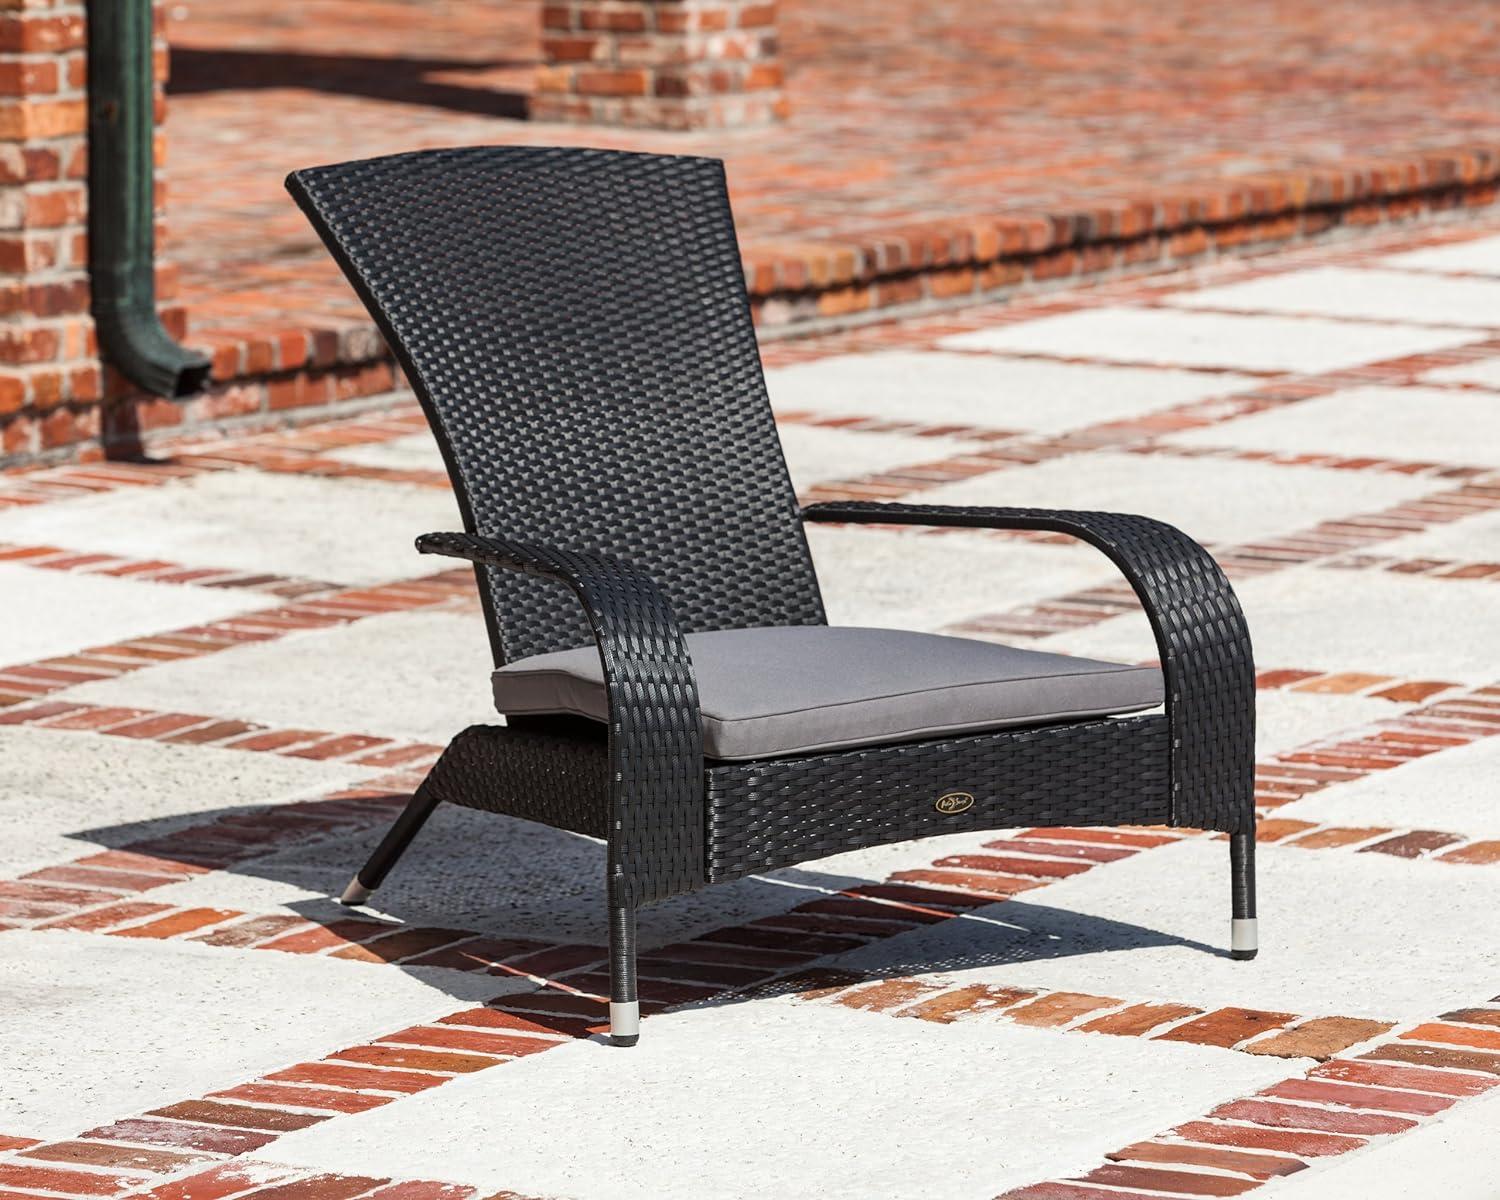 Sleek Black Coconino Resin Wicker Adirondack Chair with Grey Cushion